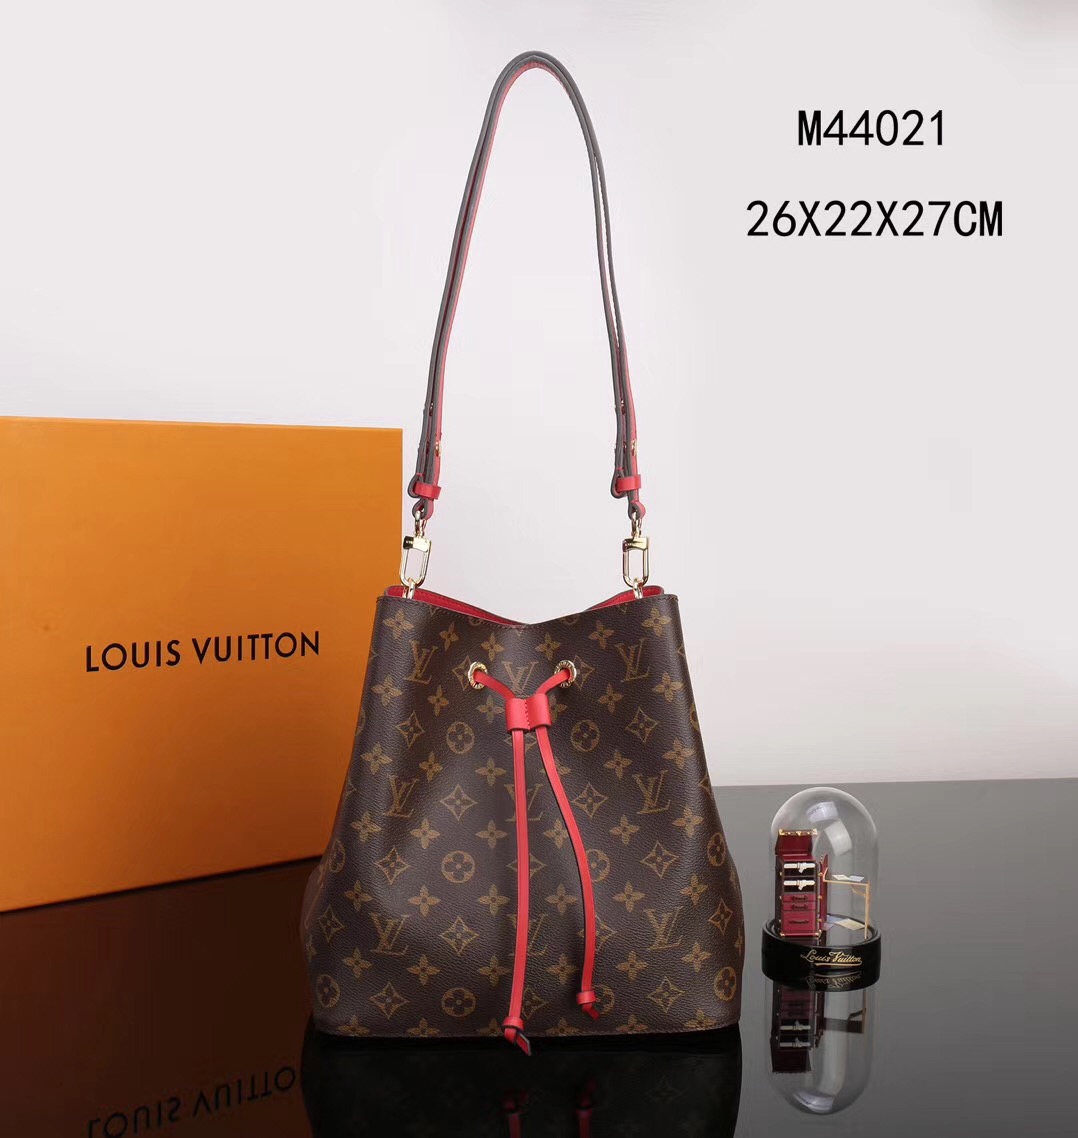 LV Louis Vuitton M44021 bags Monogram NEONOE Handbags Red